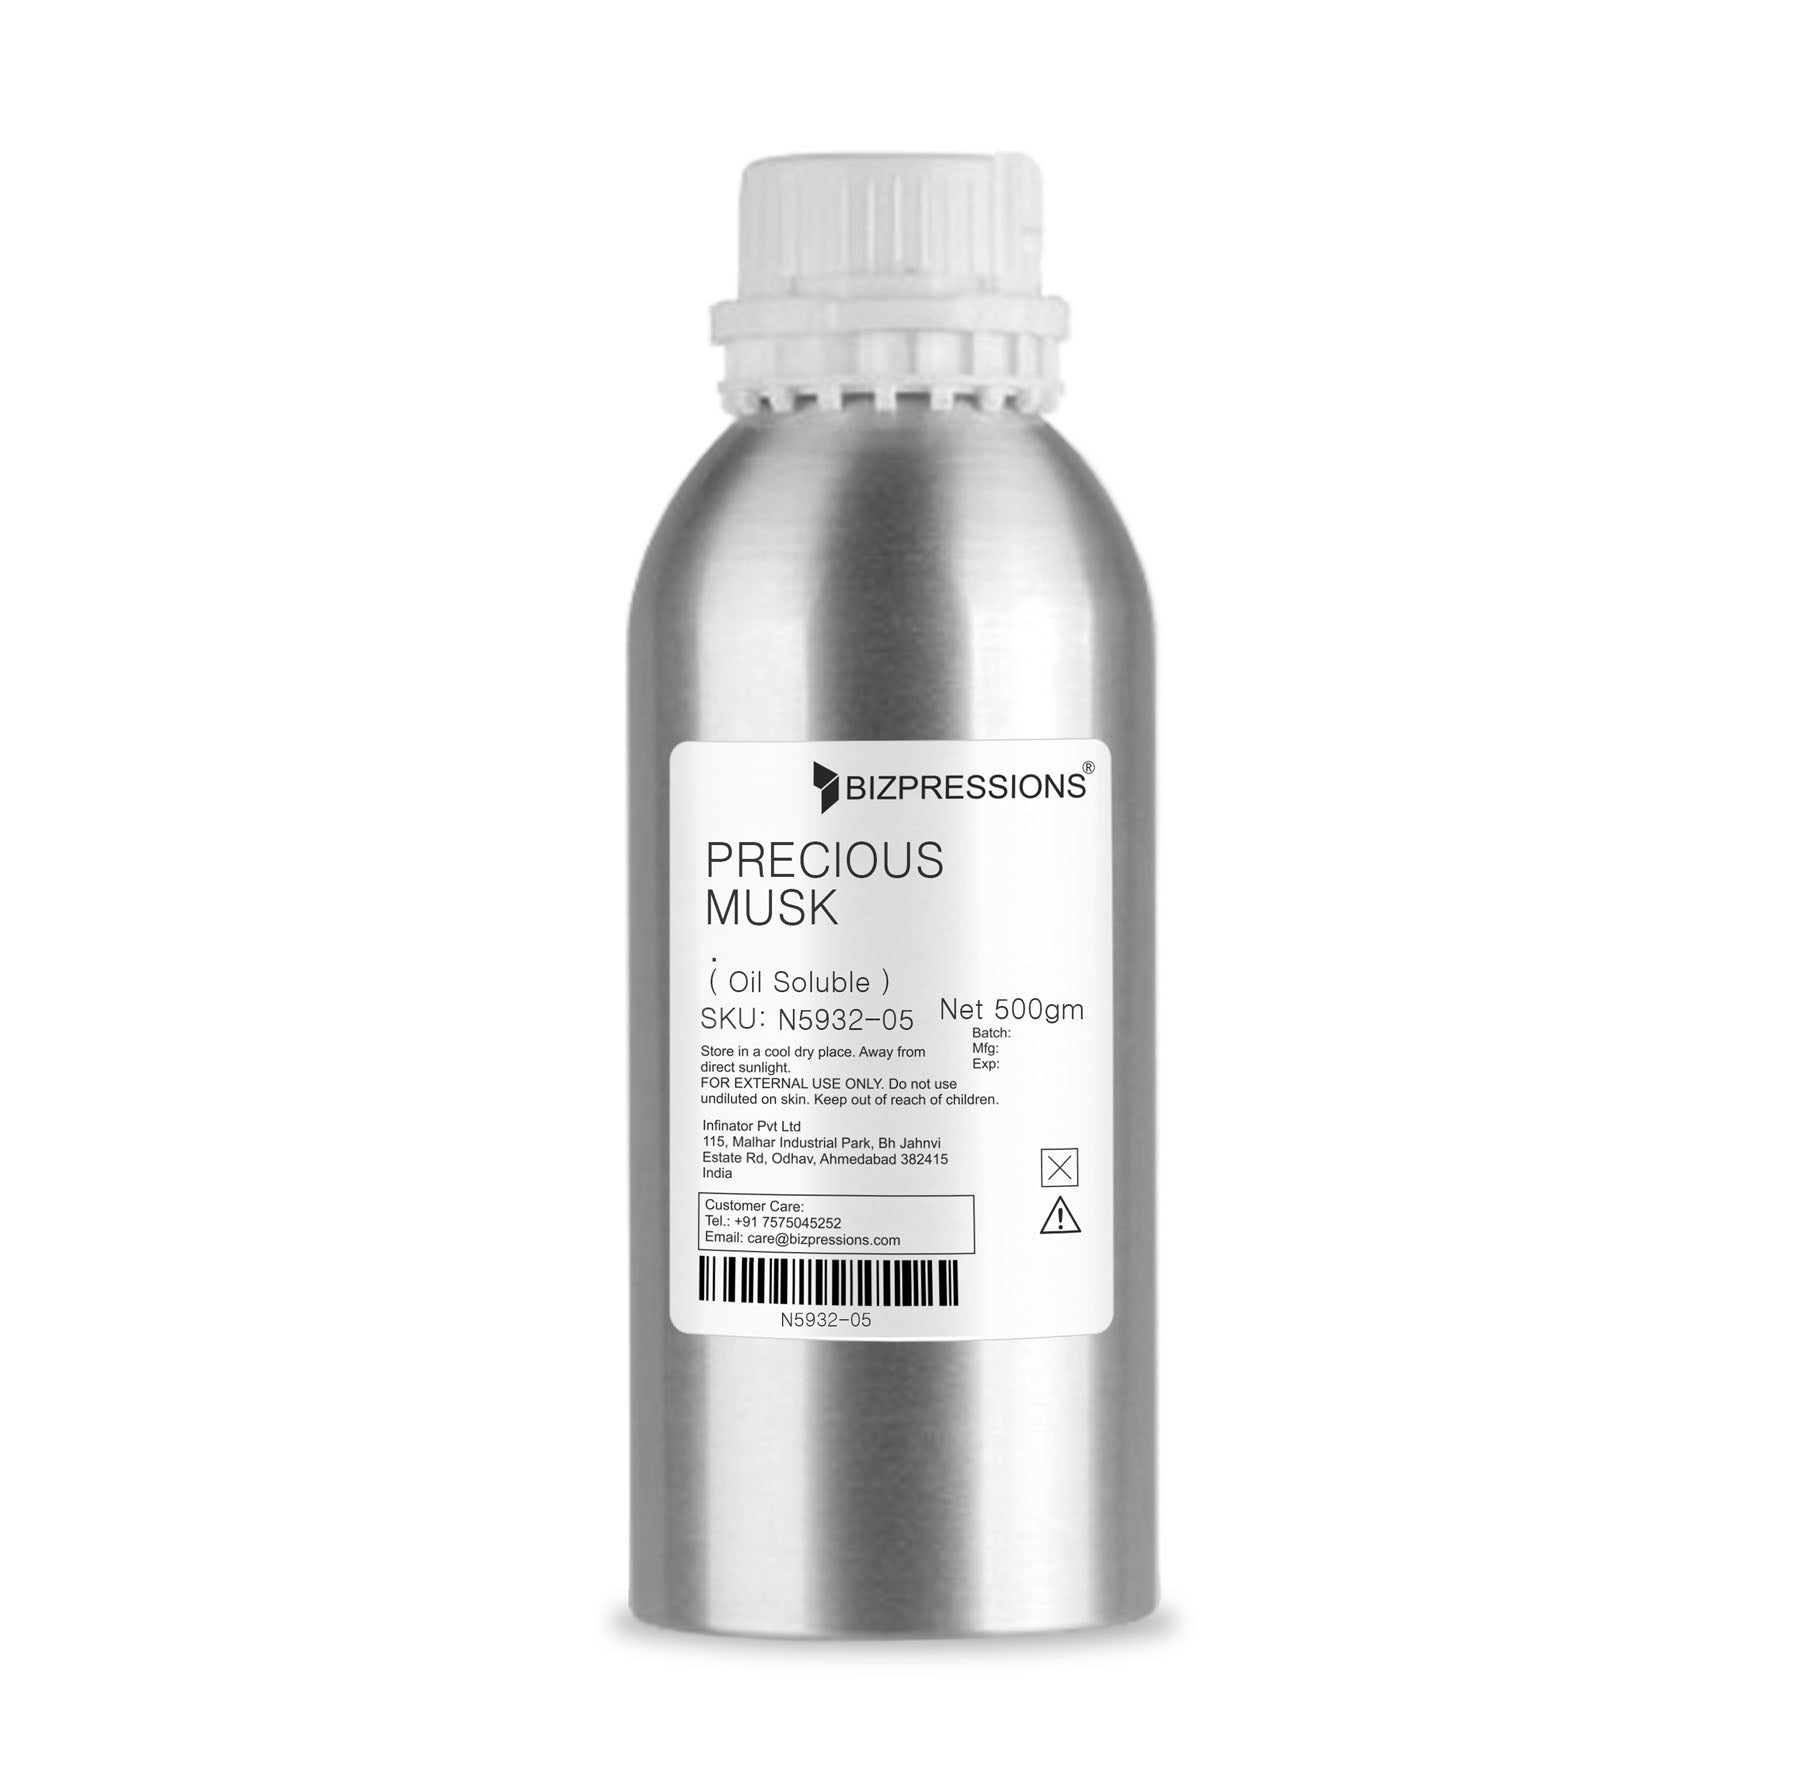 PRECIOUS MUSK - Fragrance ( Oil Soluble ) - 500 gm